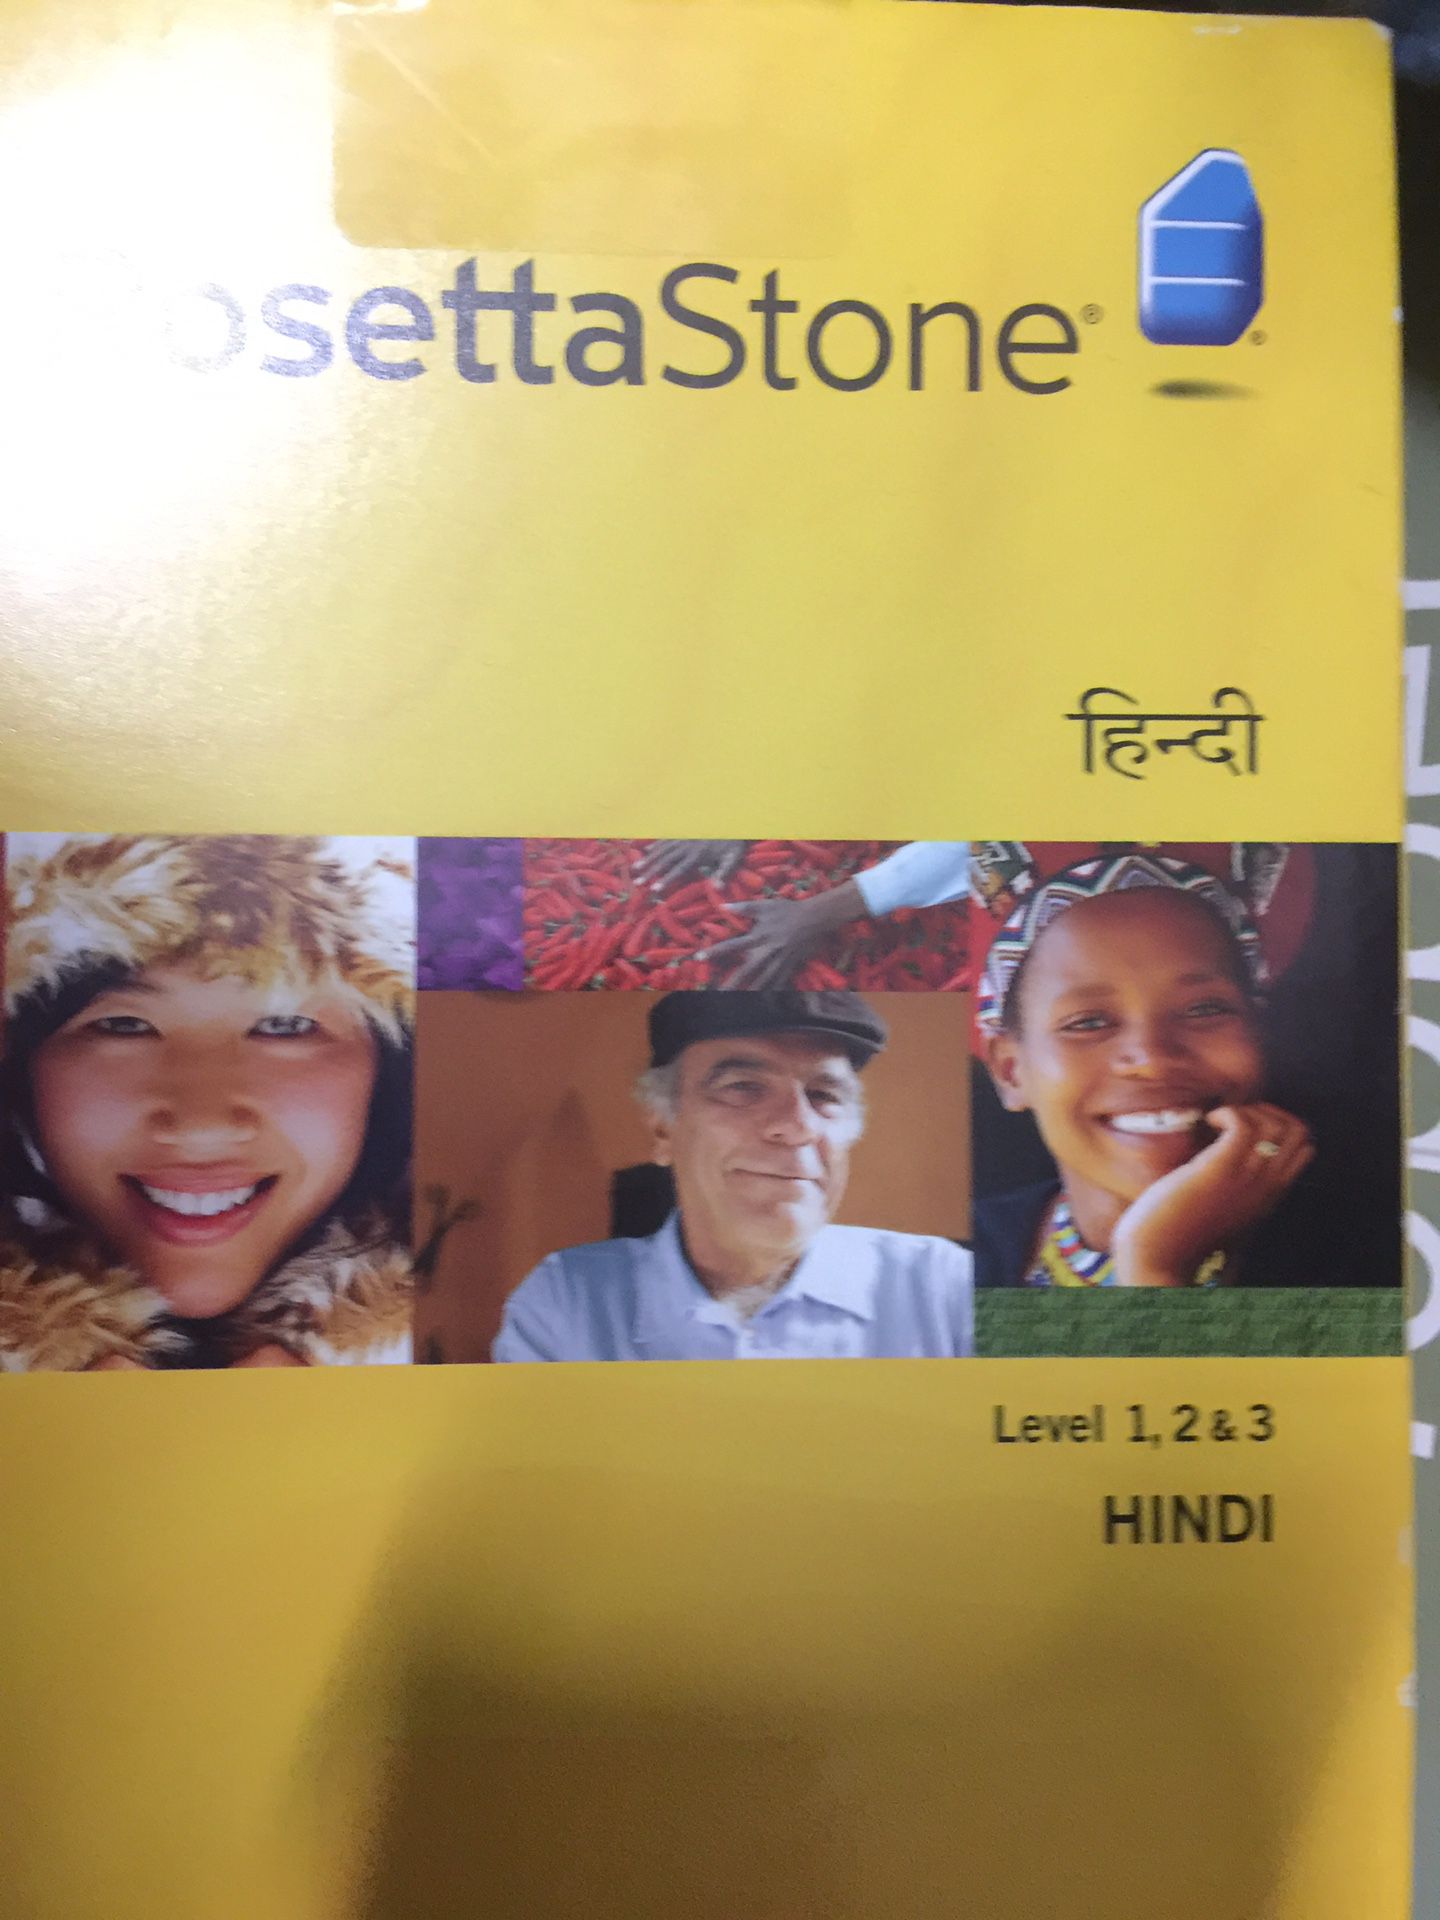 Rosetta Stone Hindi level 1,2 and 3 - software to learn Hindi Language